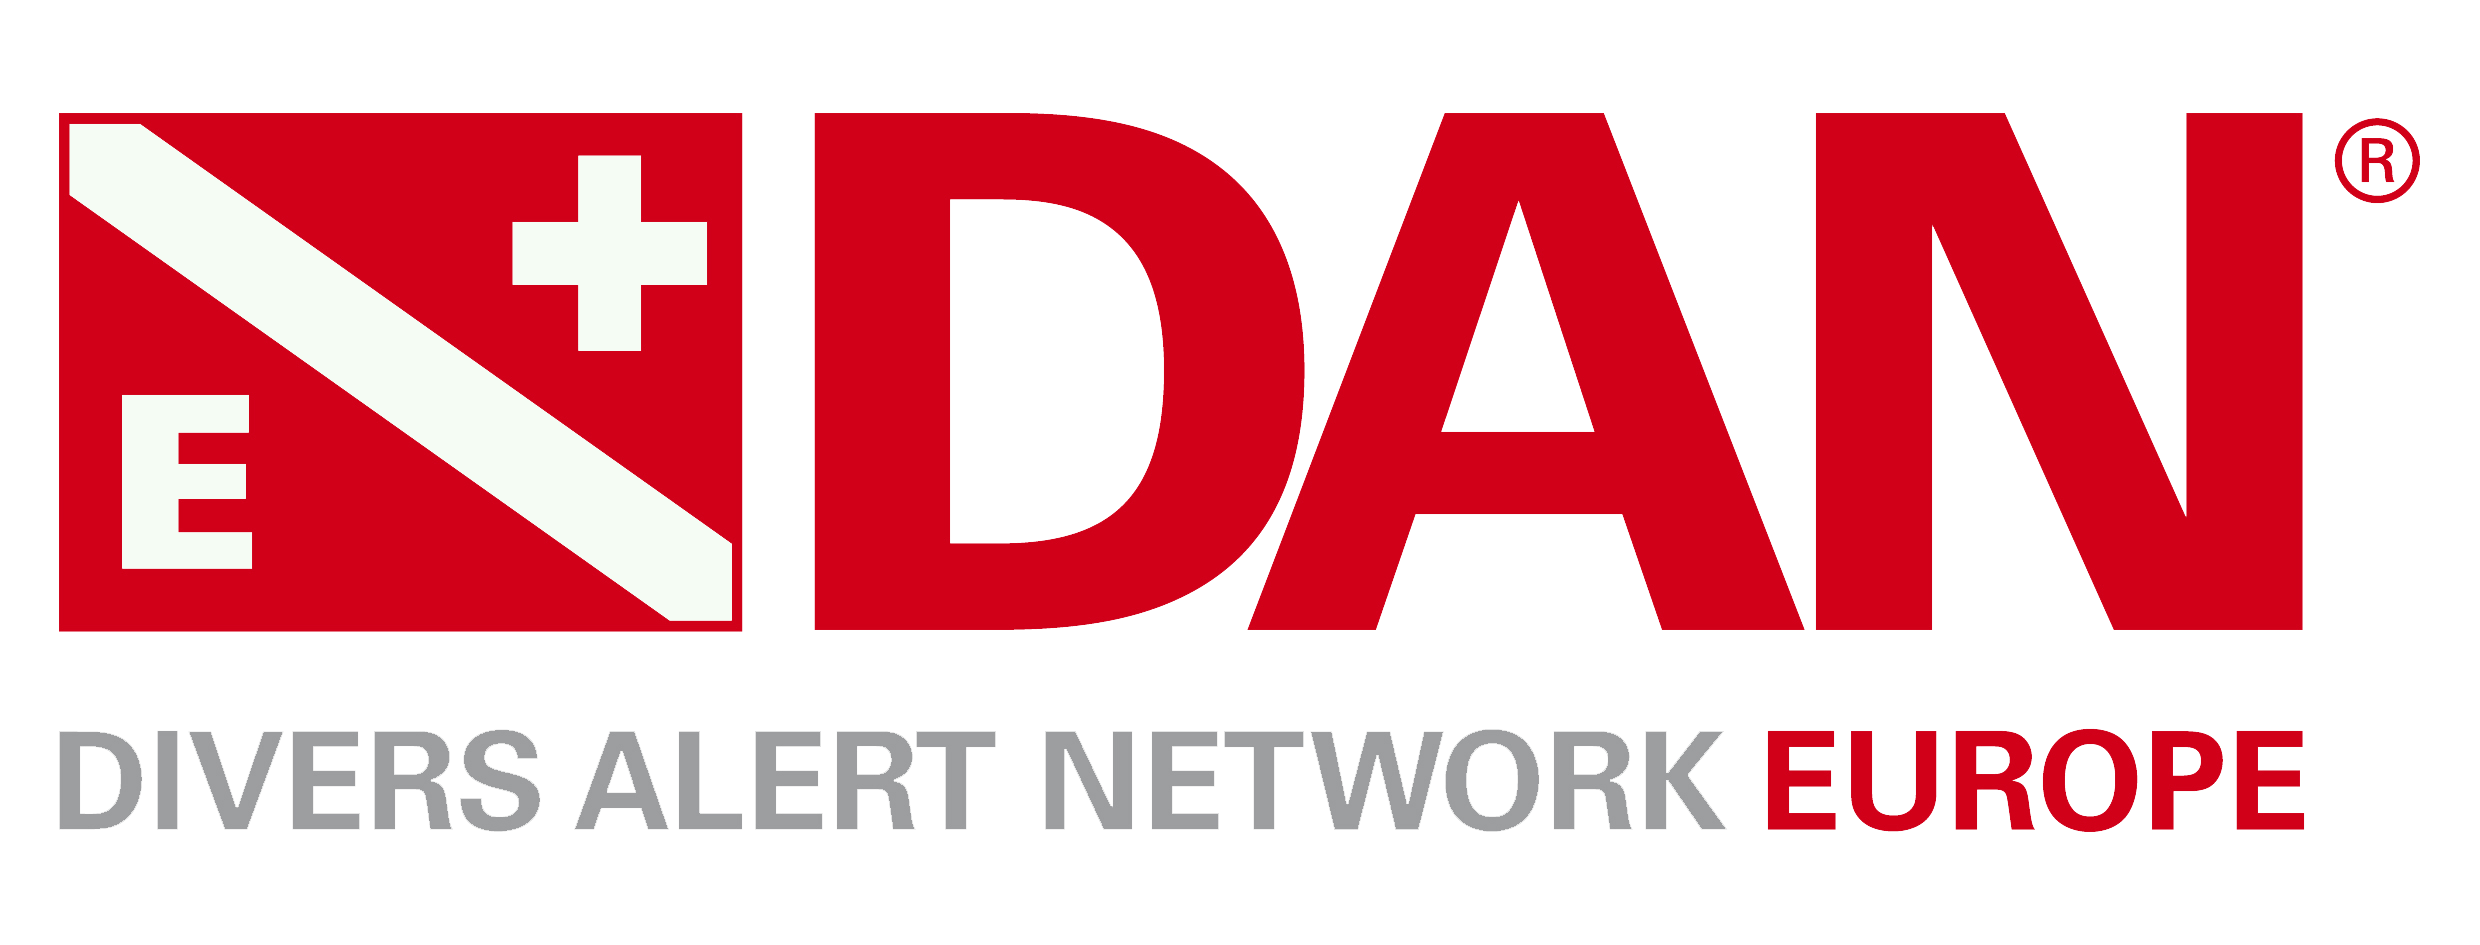 DAN_logo